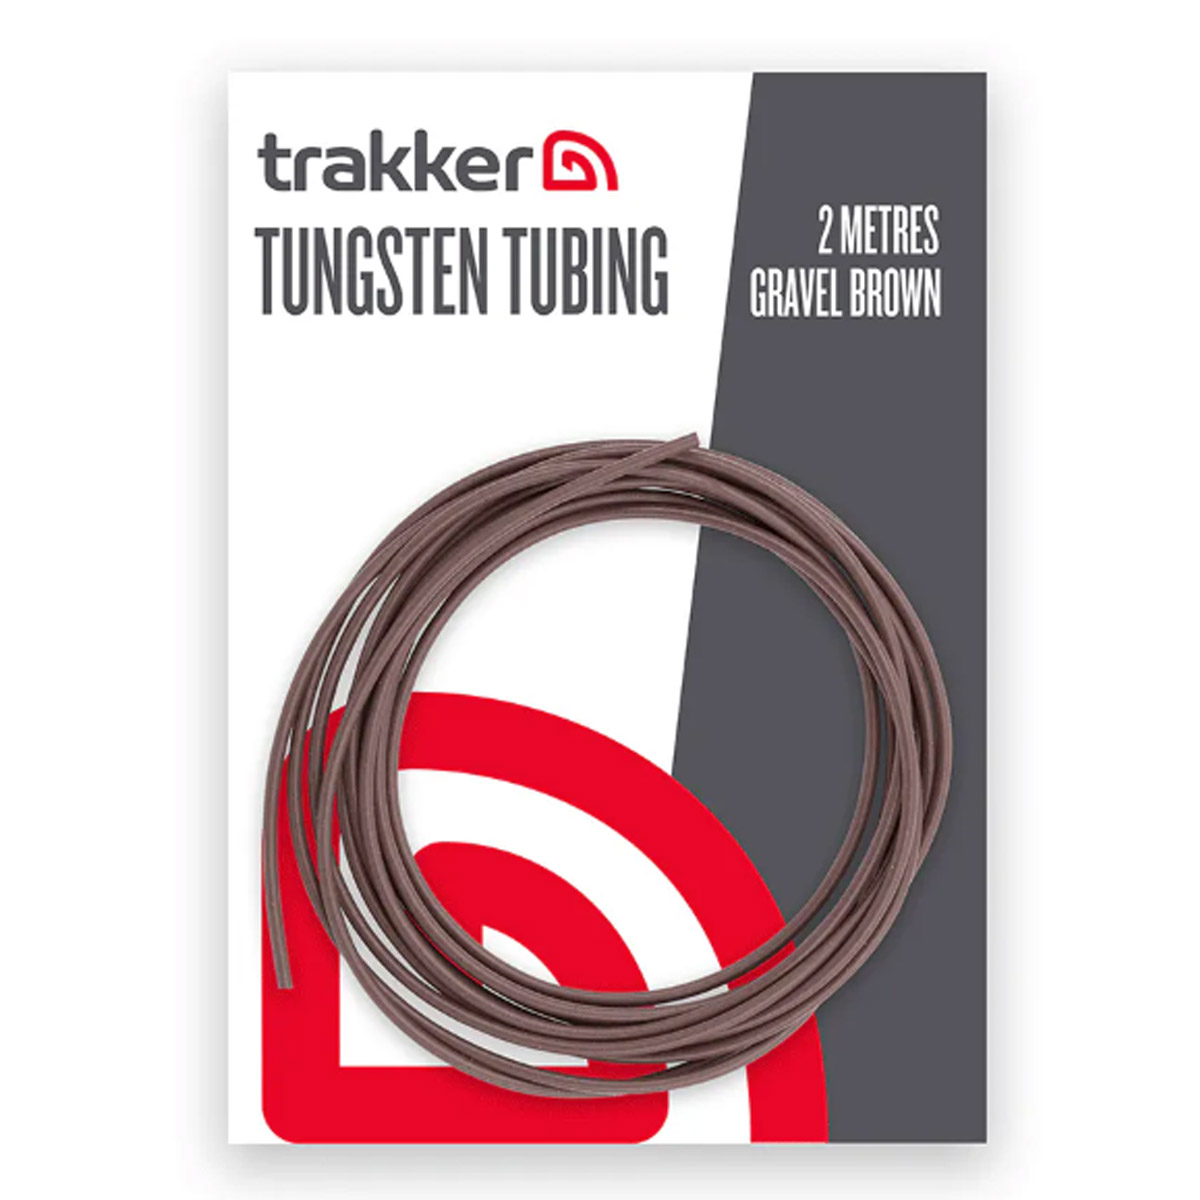 Trakker Tungsten Tubing -  Gravel brown